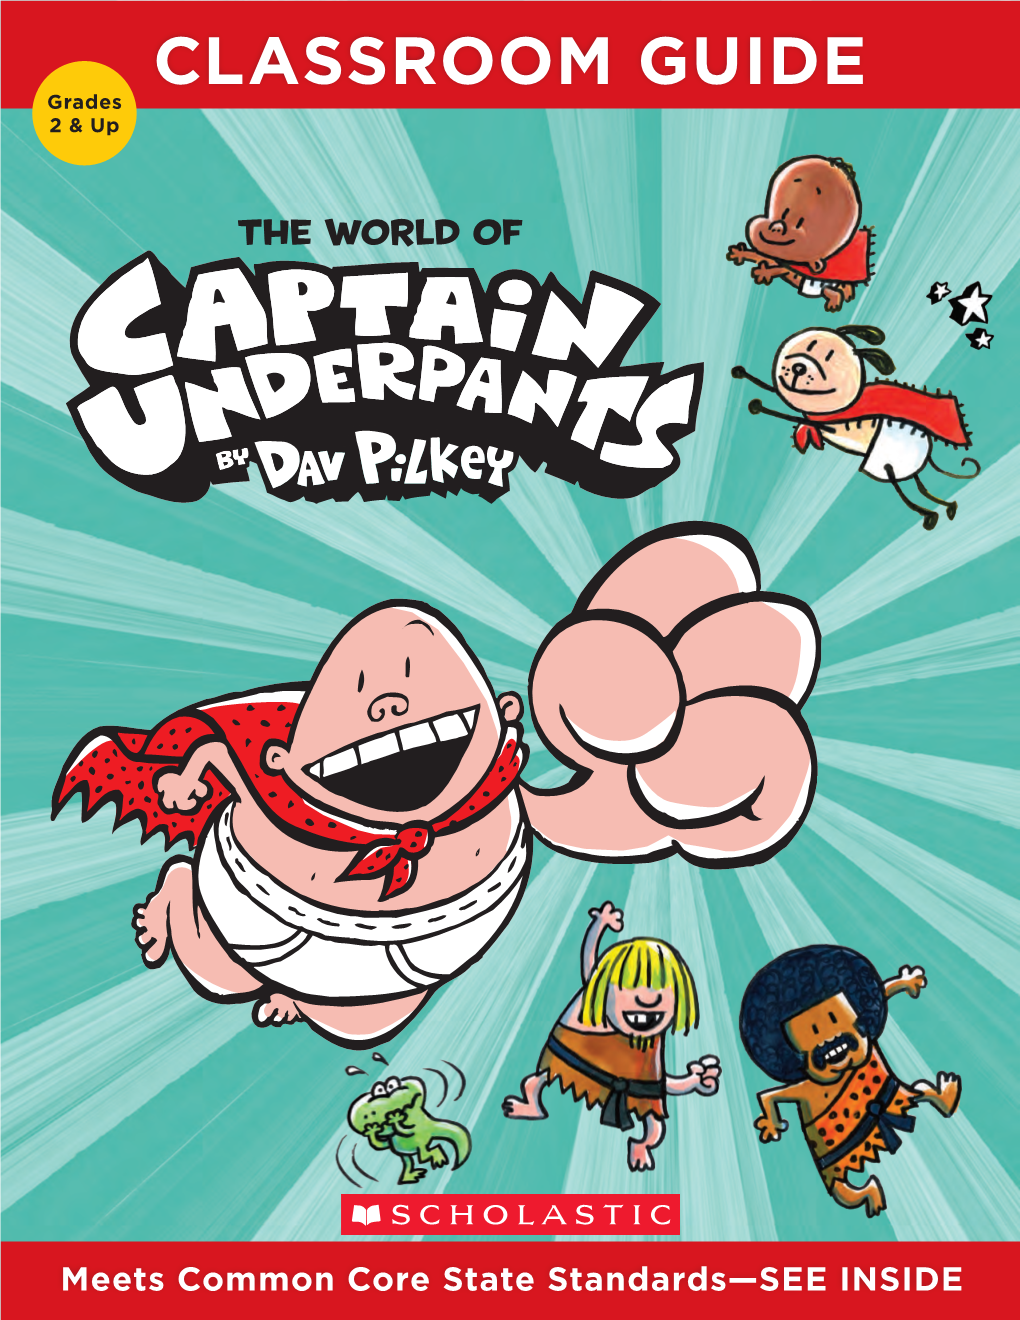 The World of Captain Underpants Classroom Guide Art © 1997–2013 Dav Pilkey